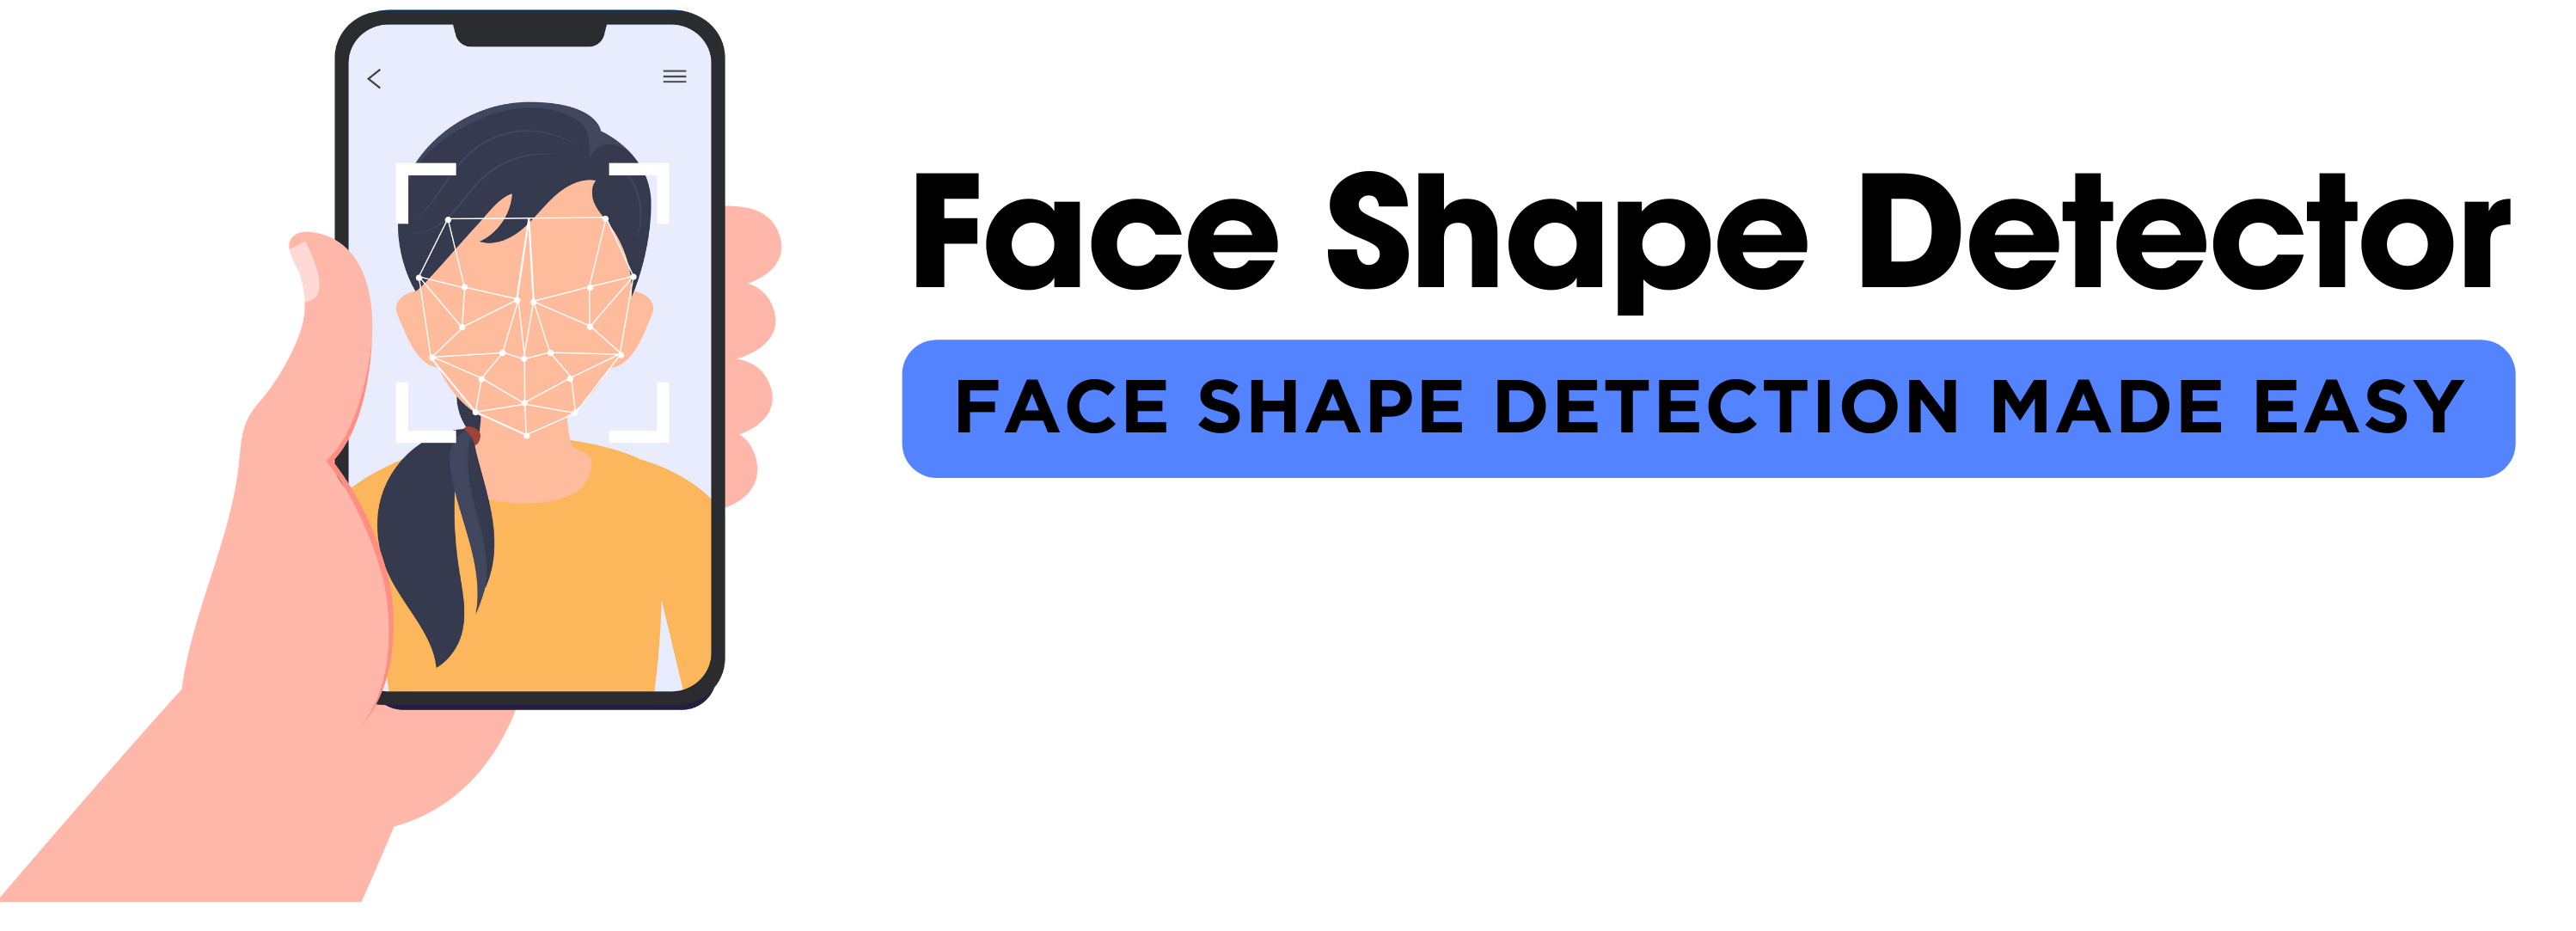 Face Shape Detector